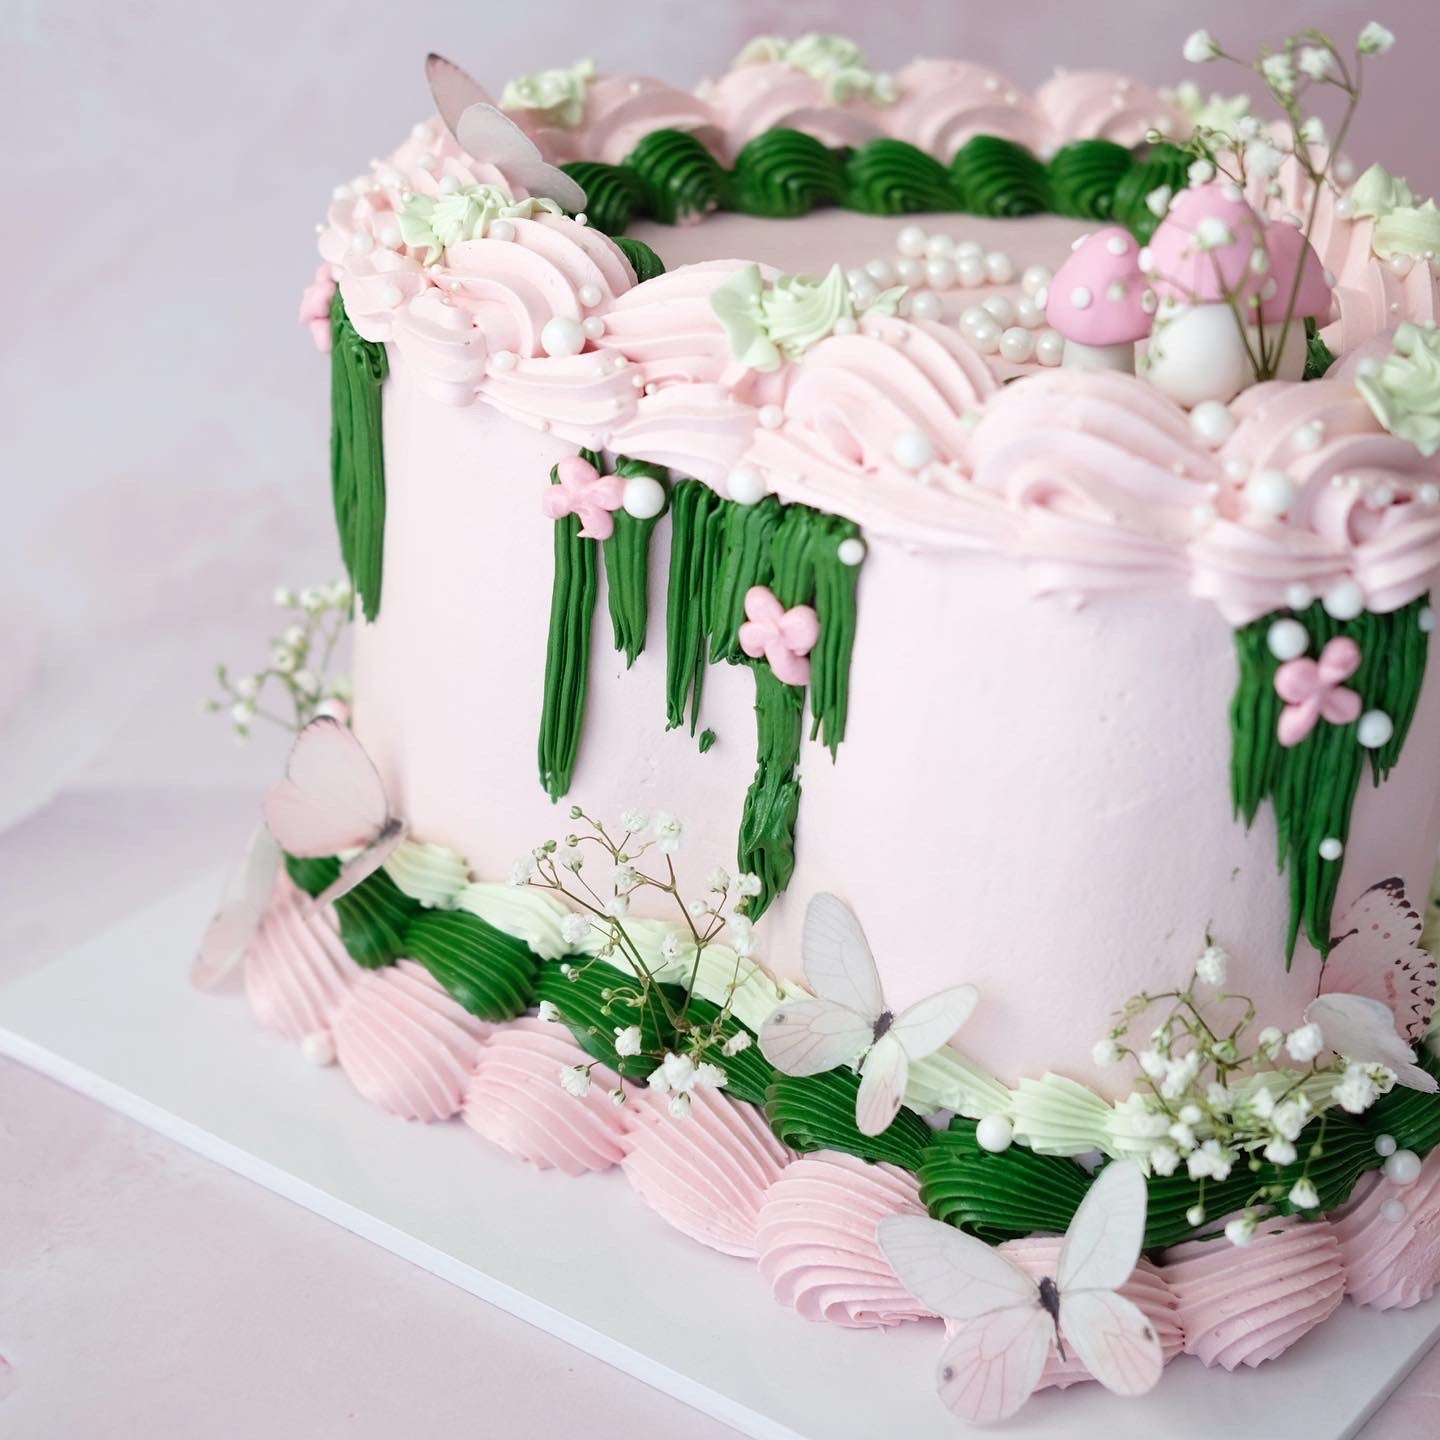 Fairy Cakes - JK Cake Designs